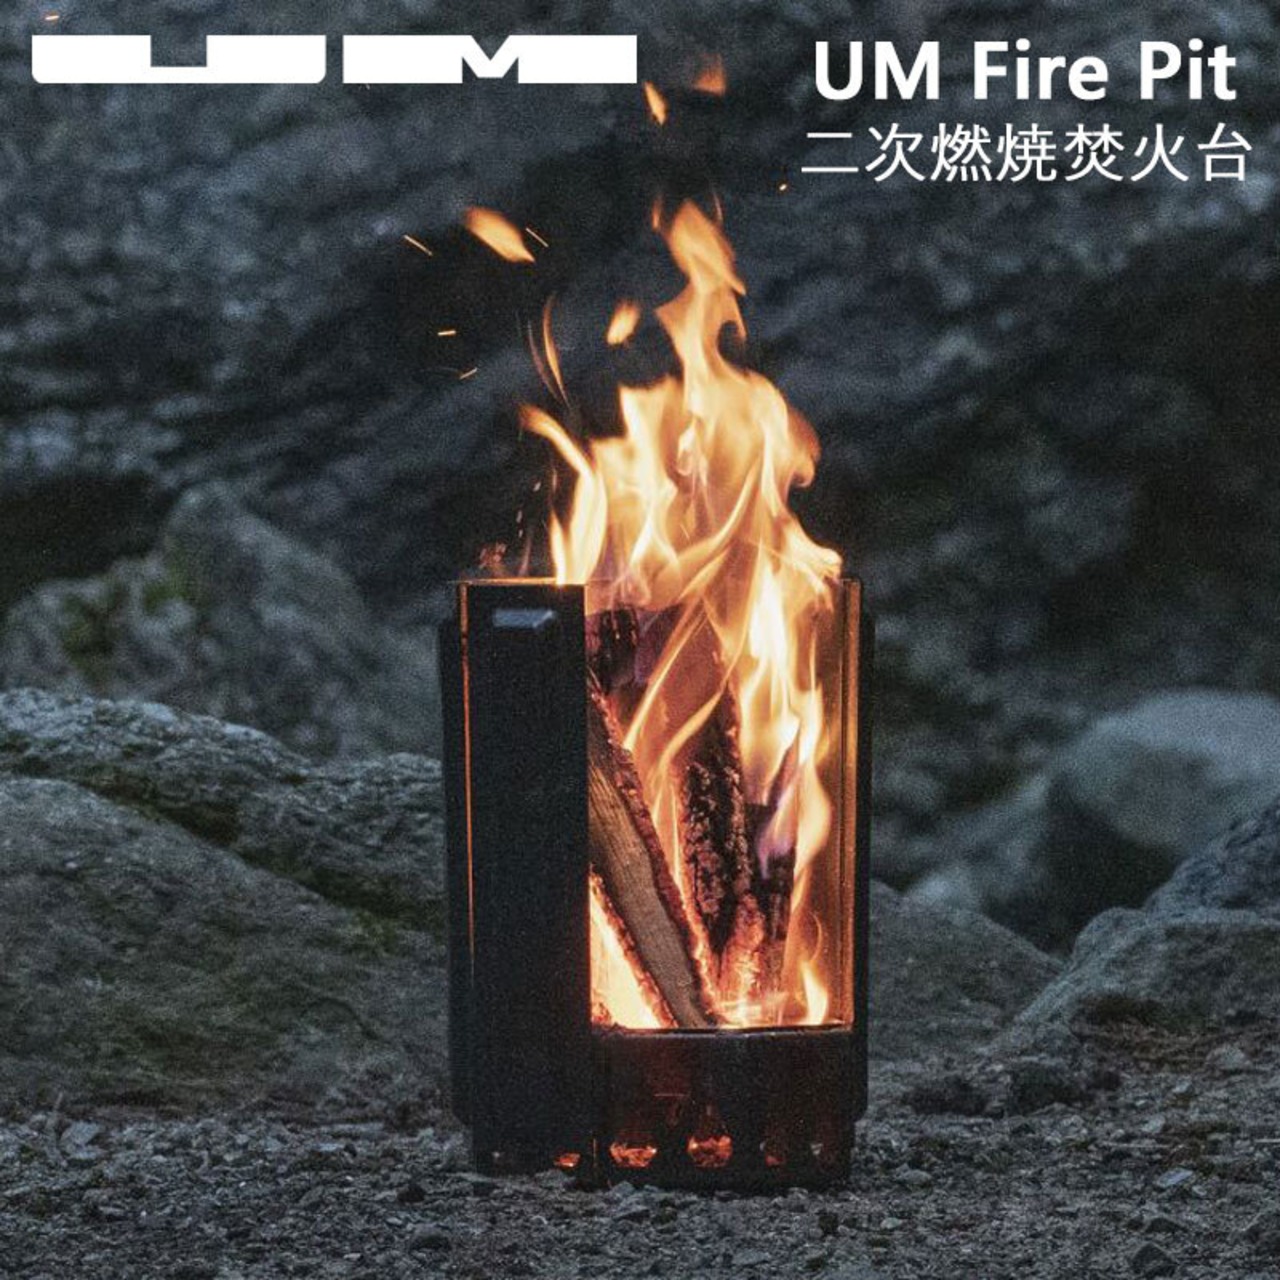 UM fire pit 焚き火台 二次燃焼 五徳セット 収納袋付き